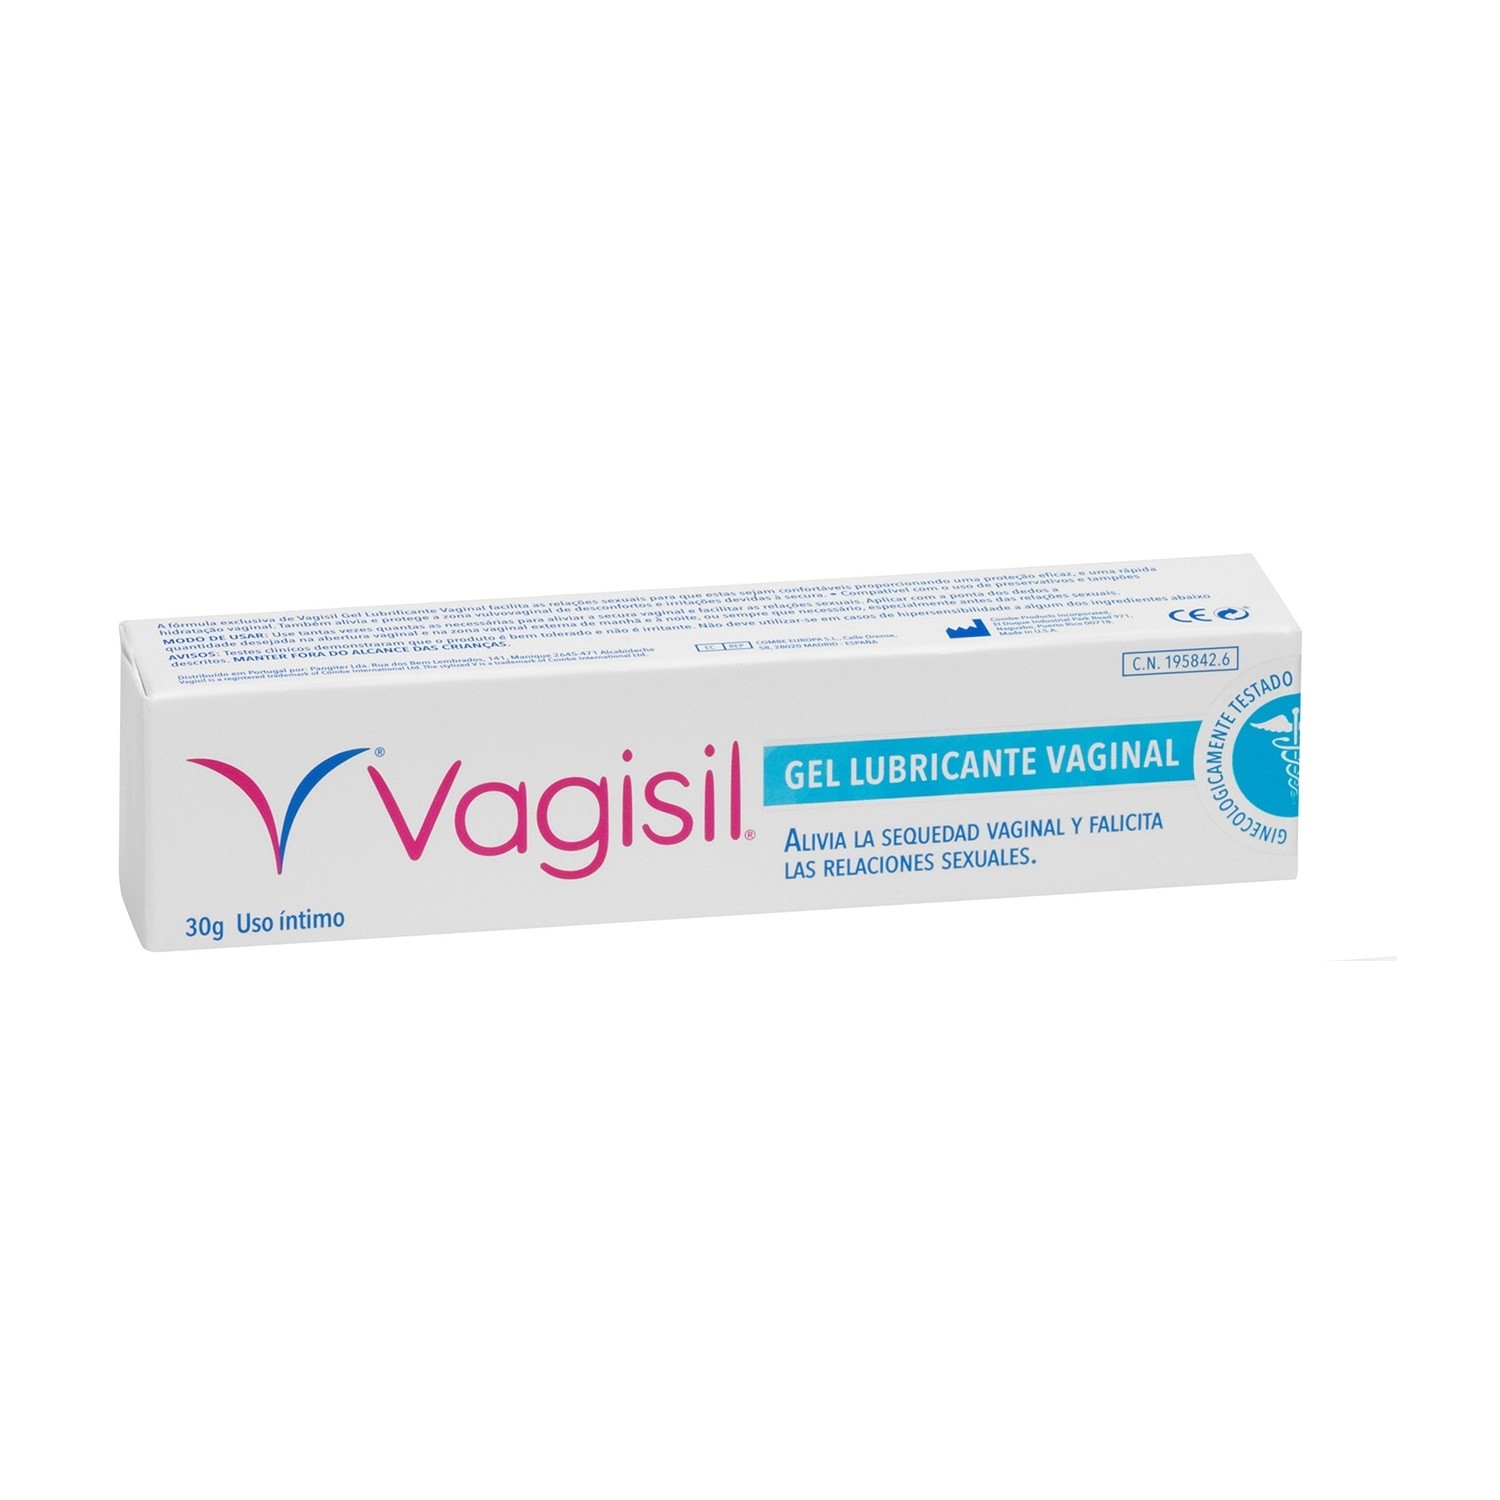 Vagisil Gel Lubricante Vaginal gr) | Farmacia Tuset